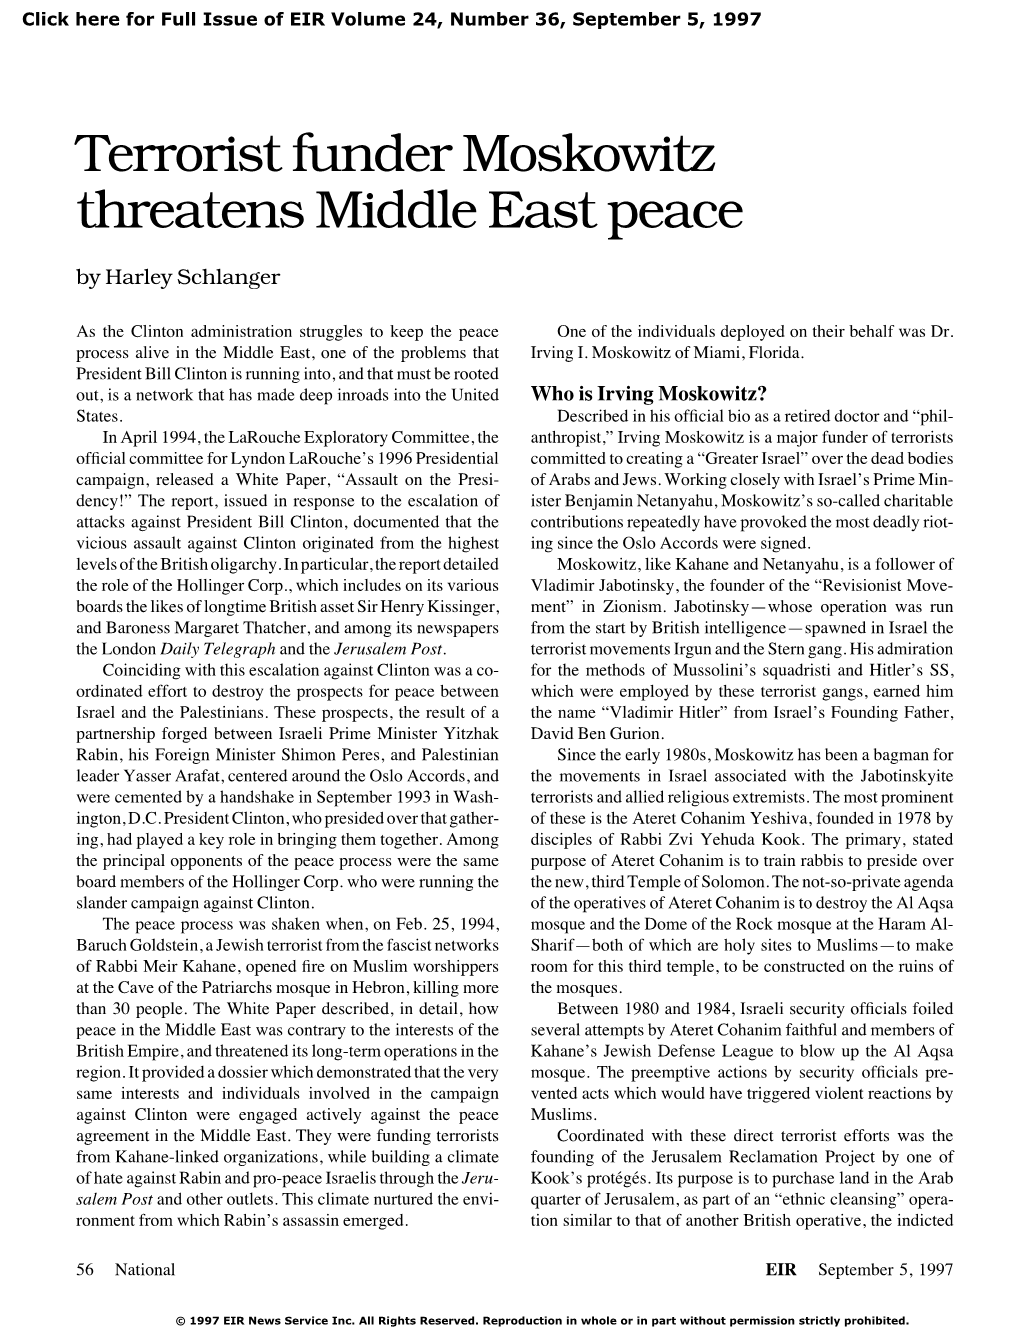 Terrorist Funder Moskowitz Threatens Middle East Peace